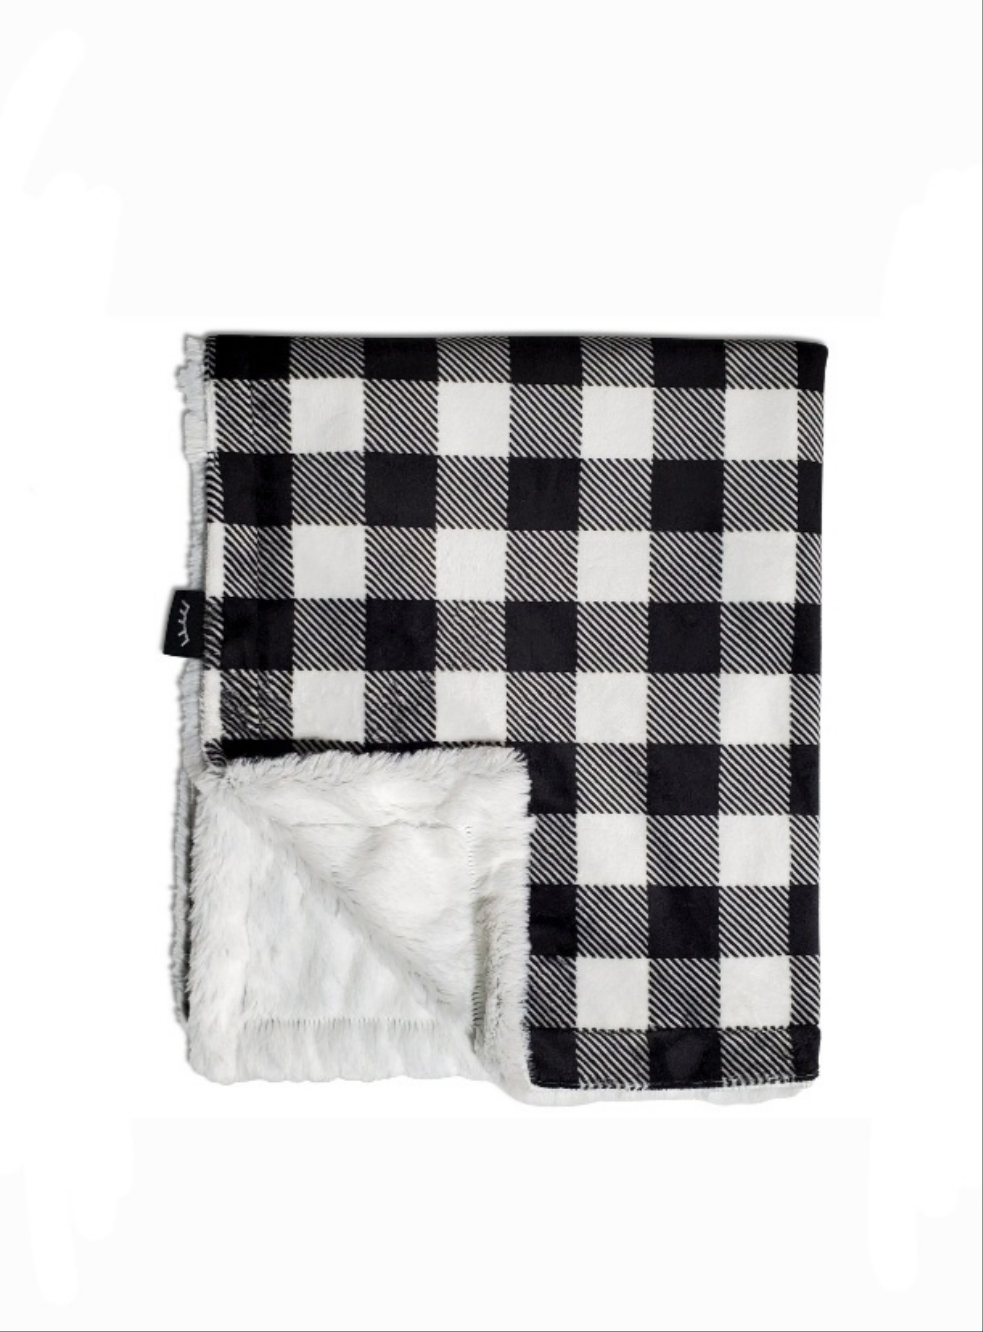 Plaid Black & White Minky Blanket